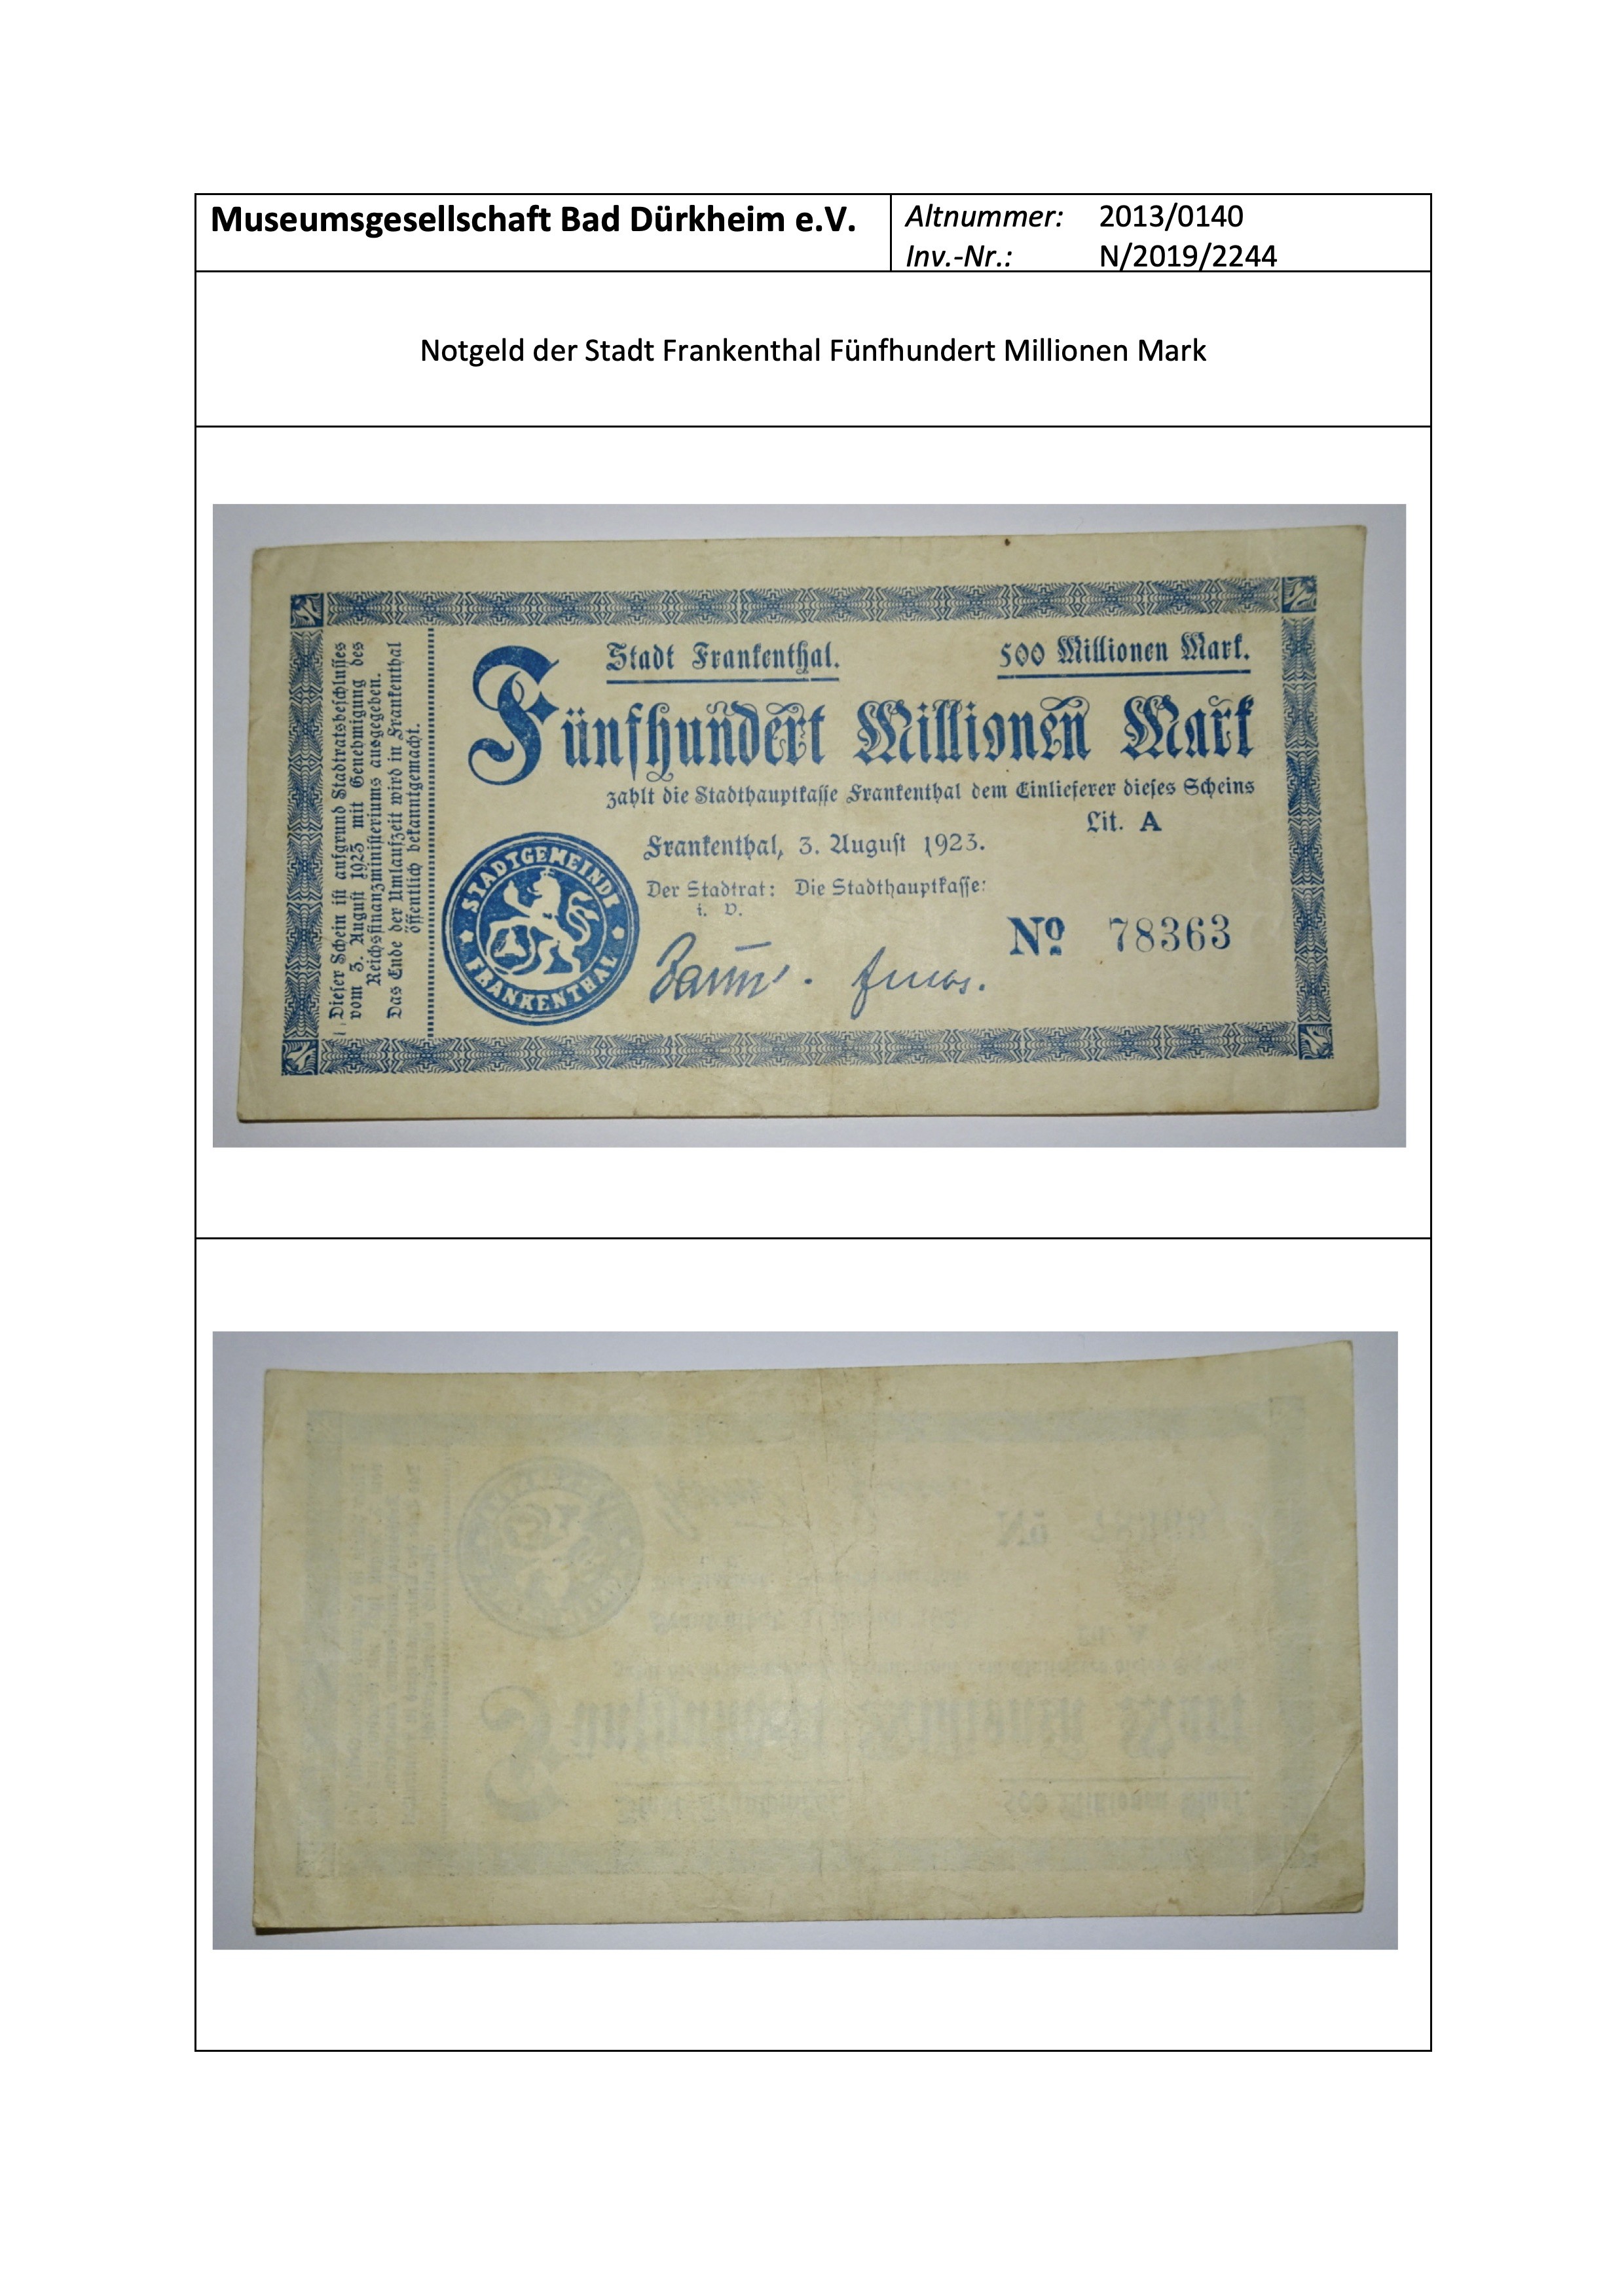 Notgeld der Stadt Frankenthal Fünfhundert Millionen Mark (Museumsgesellschaft Bad Dürkheim e.V. CC BY-NC-SA)